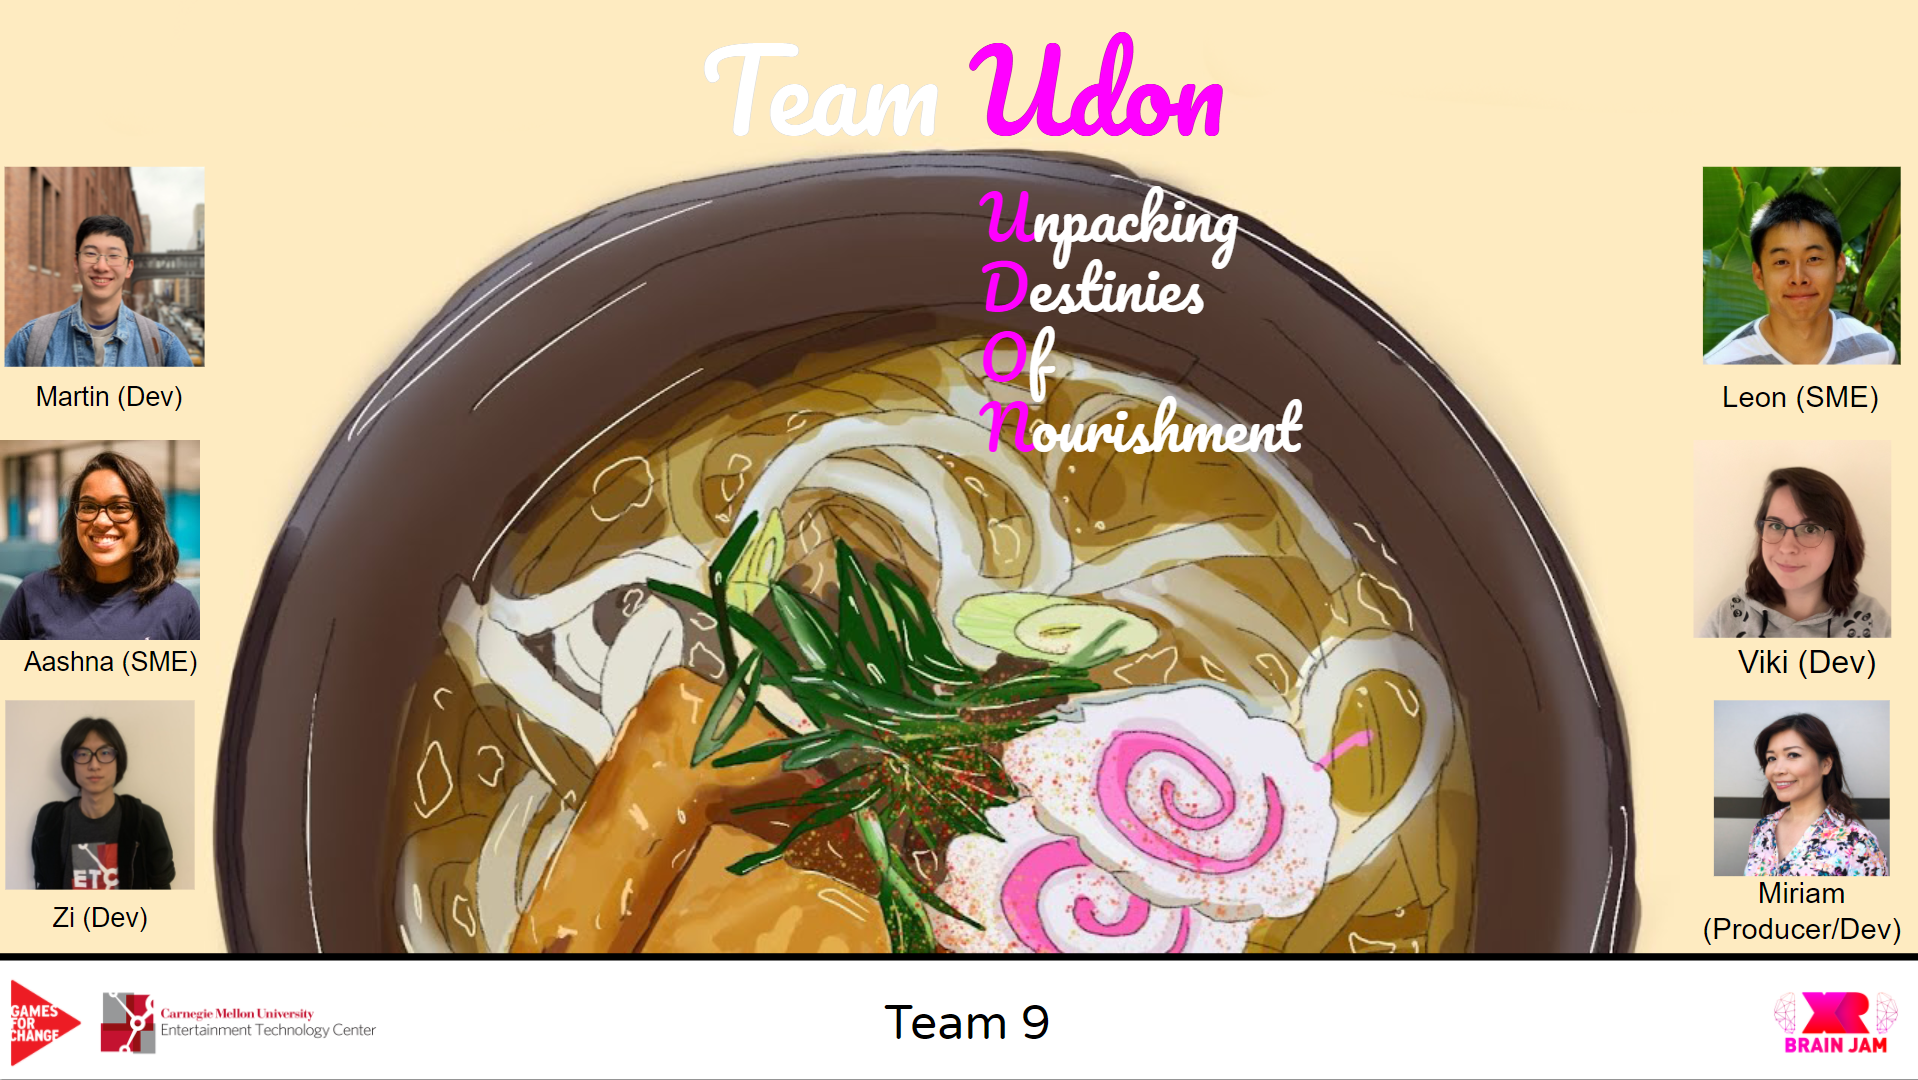 Team UDON